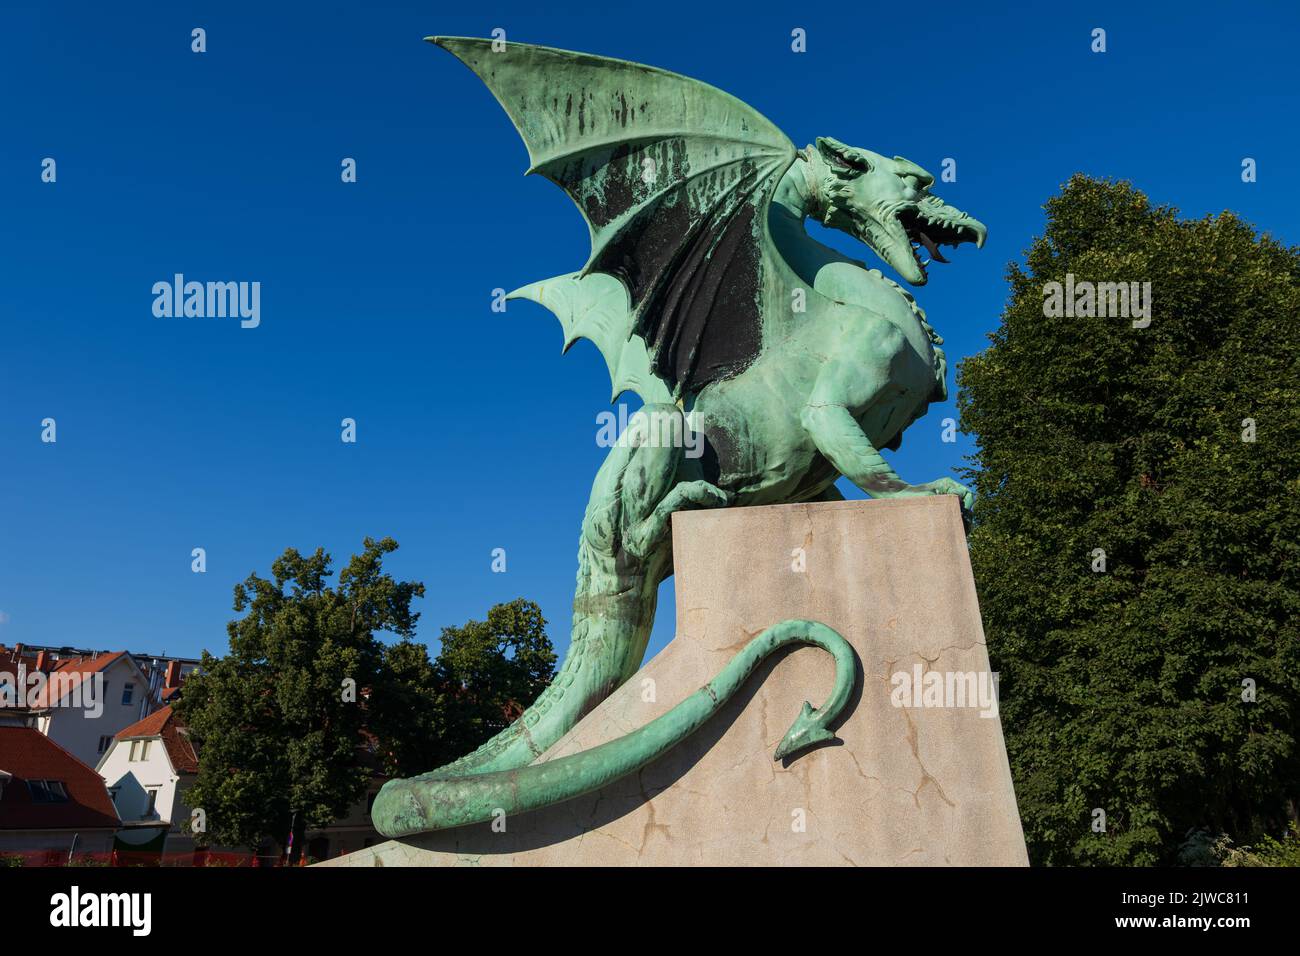 The Dragon statue on the Dragon Bridge in Ljubljana, Slovenia, city landmark. Stock Photo